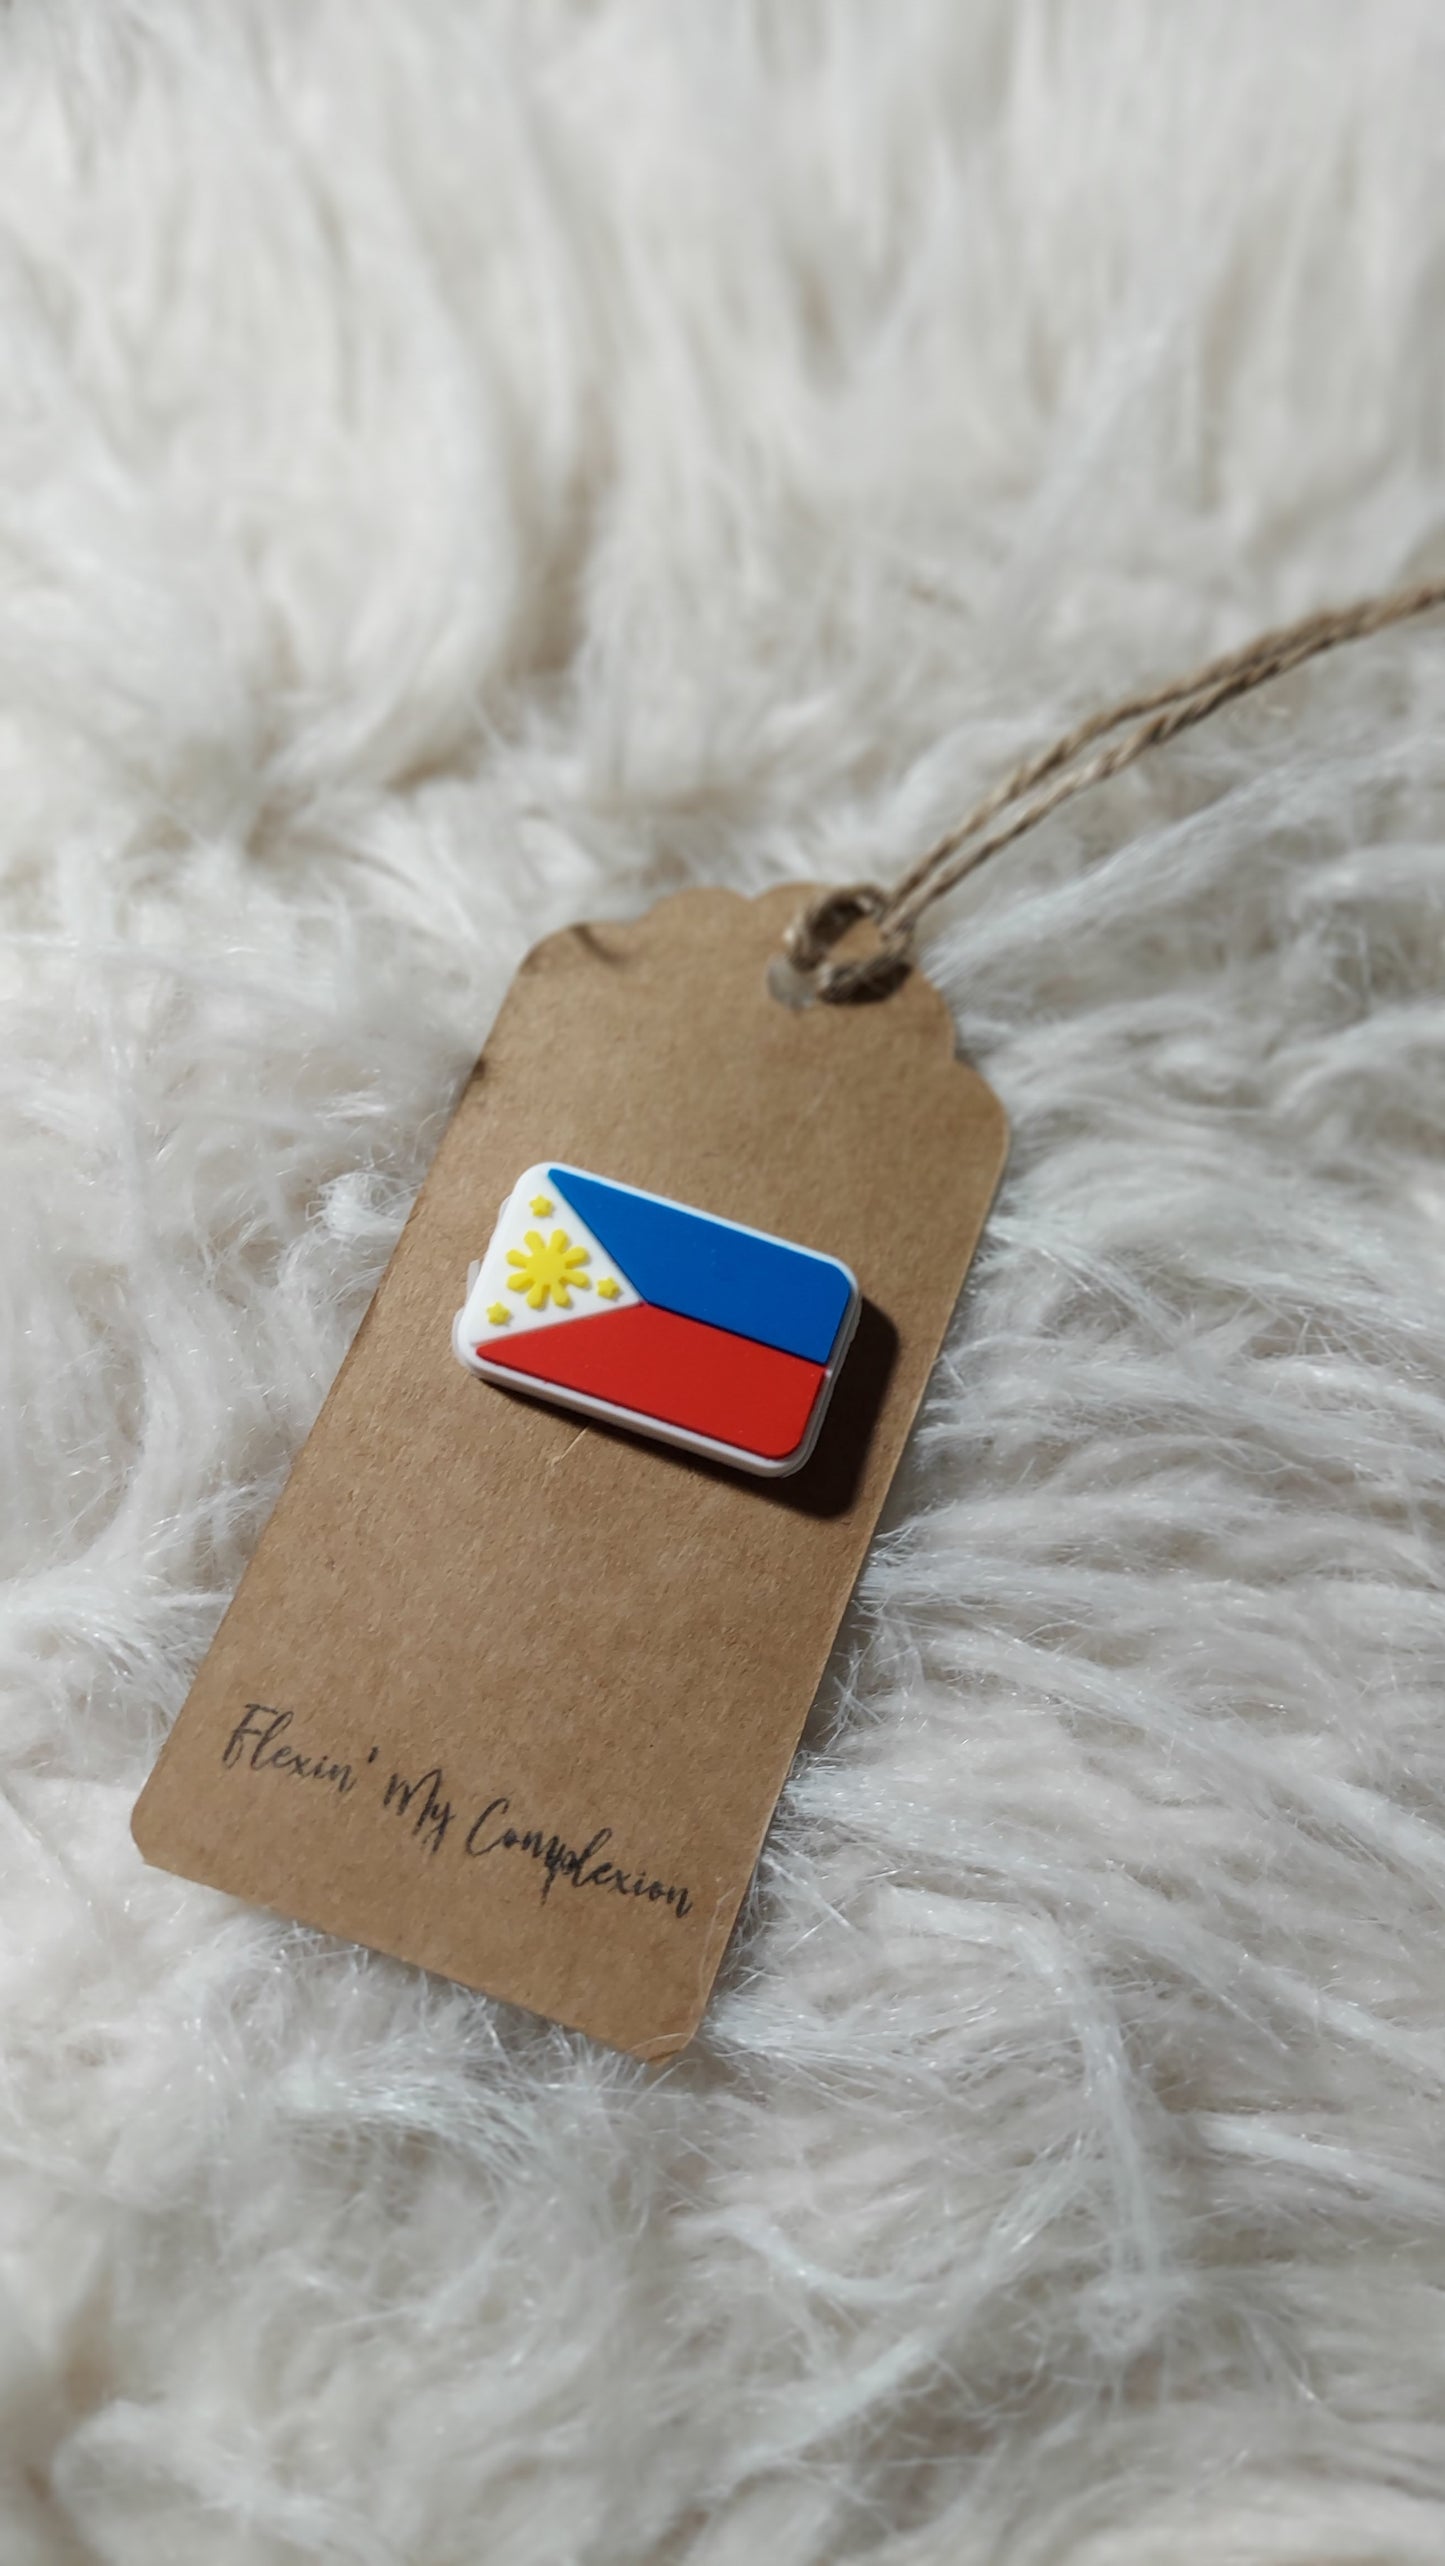 Philippines "Flag"